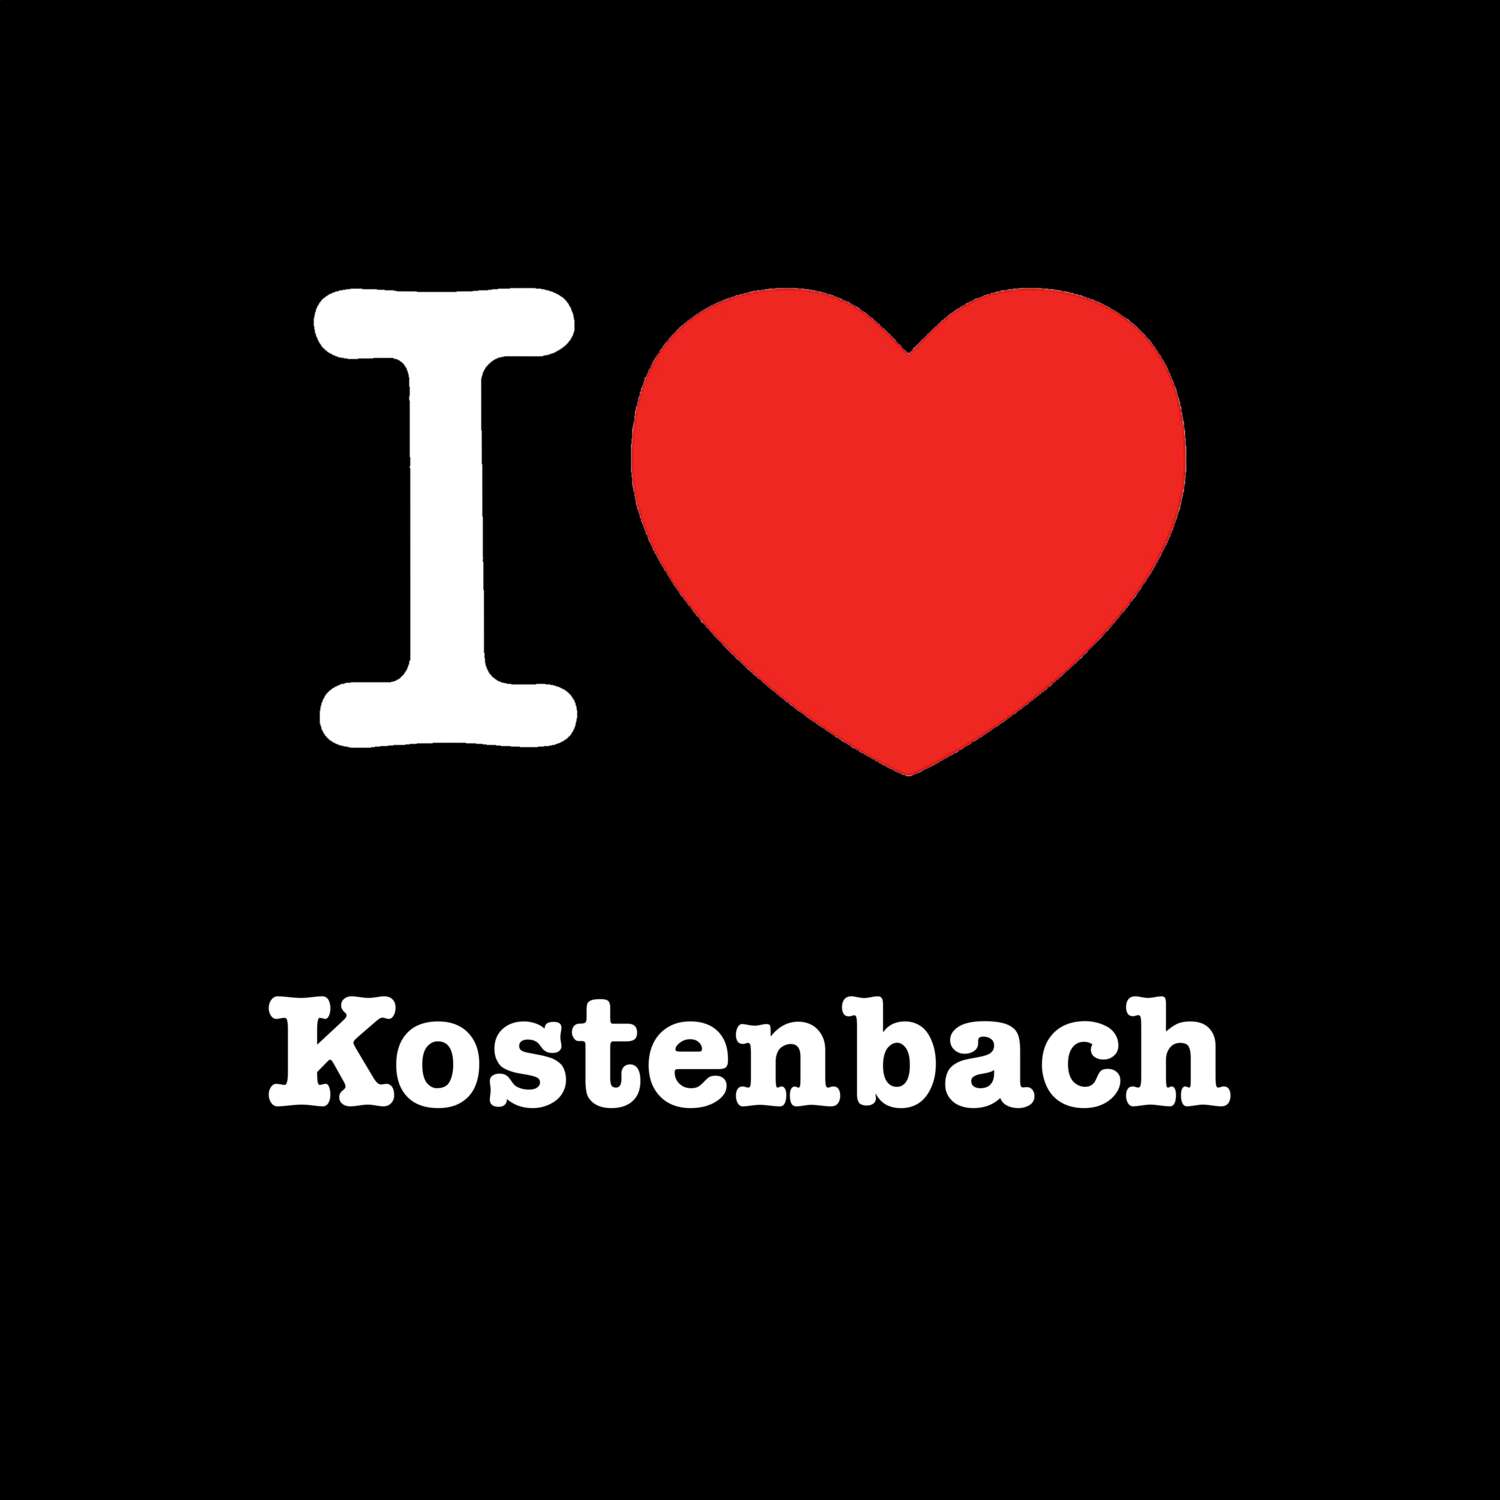 Kostenbach T-Shirt »I love«